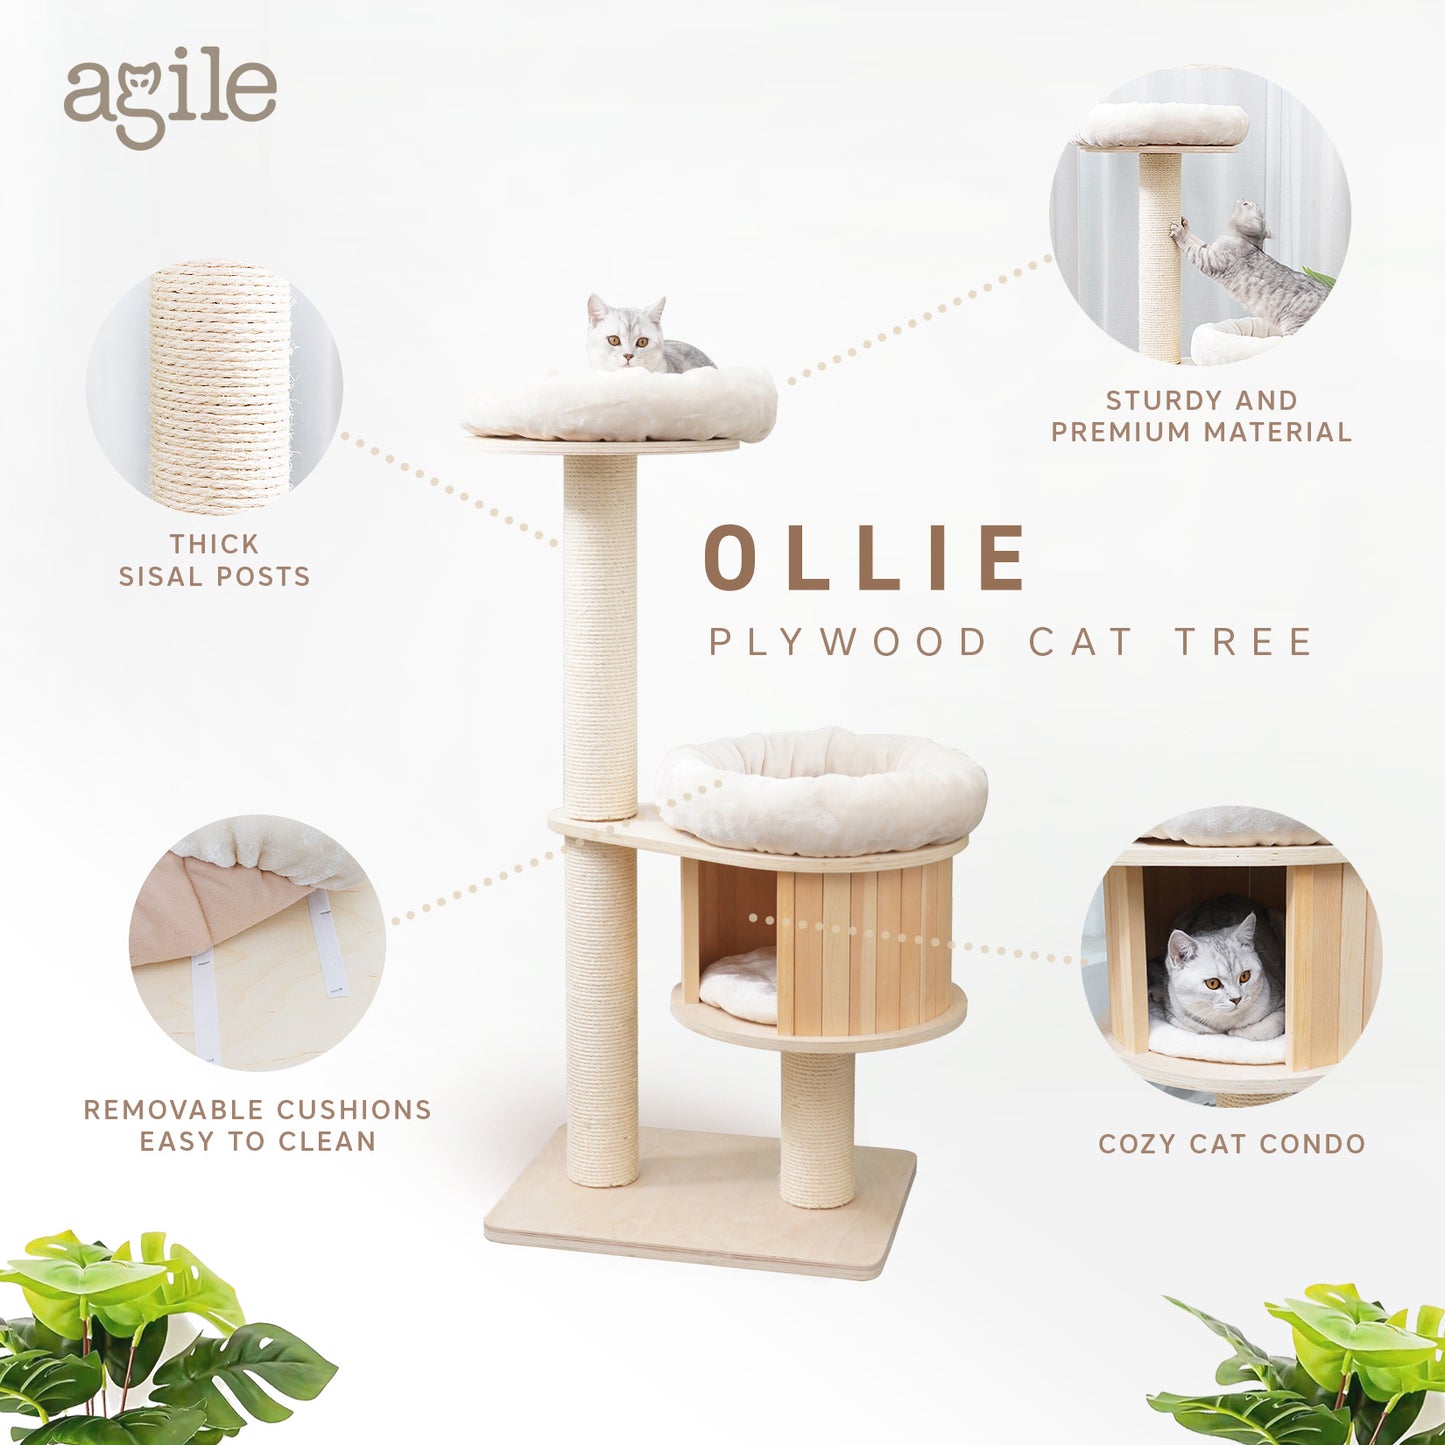 Ollie 130 cm - Plywood Cat Tree